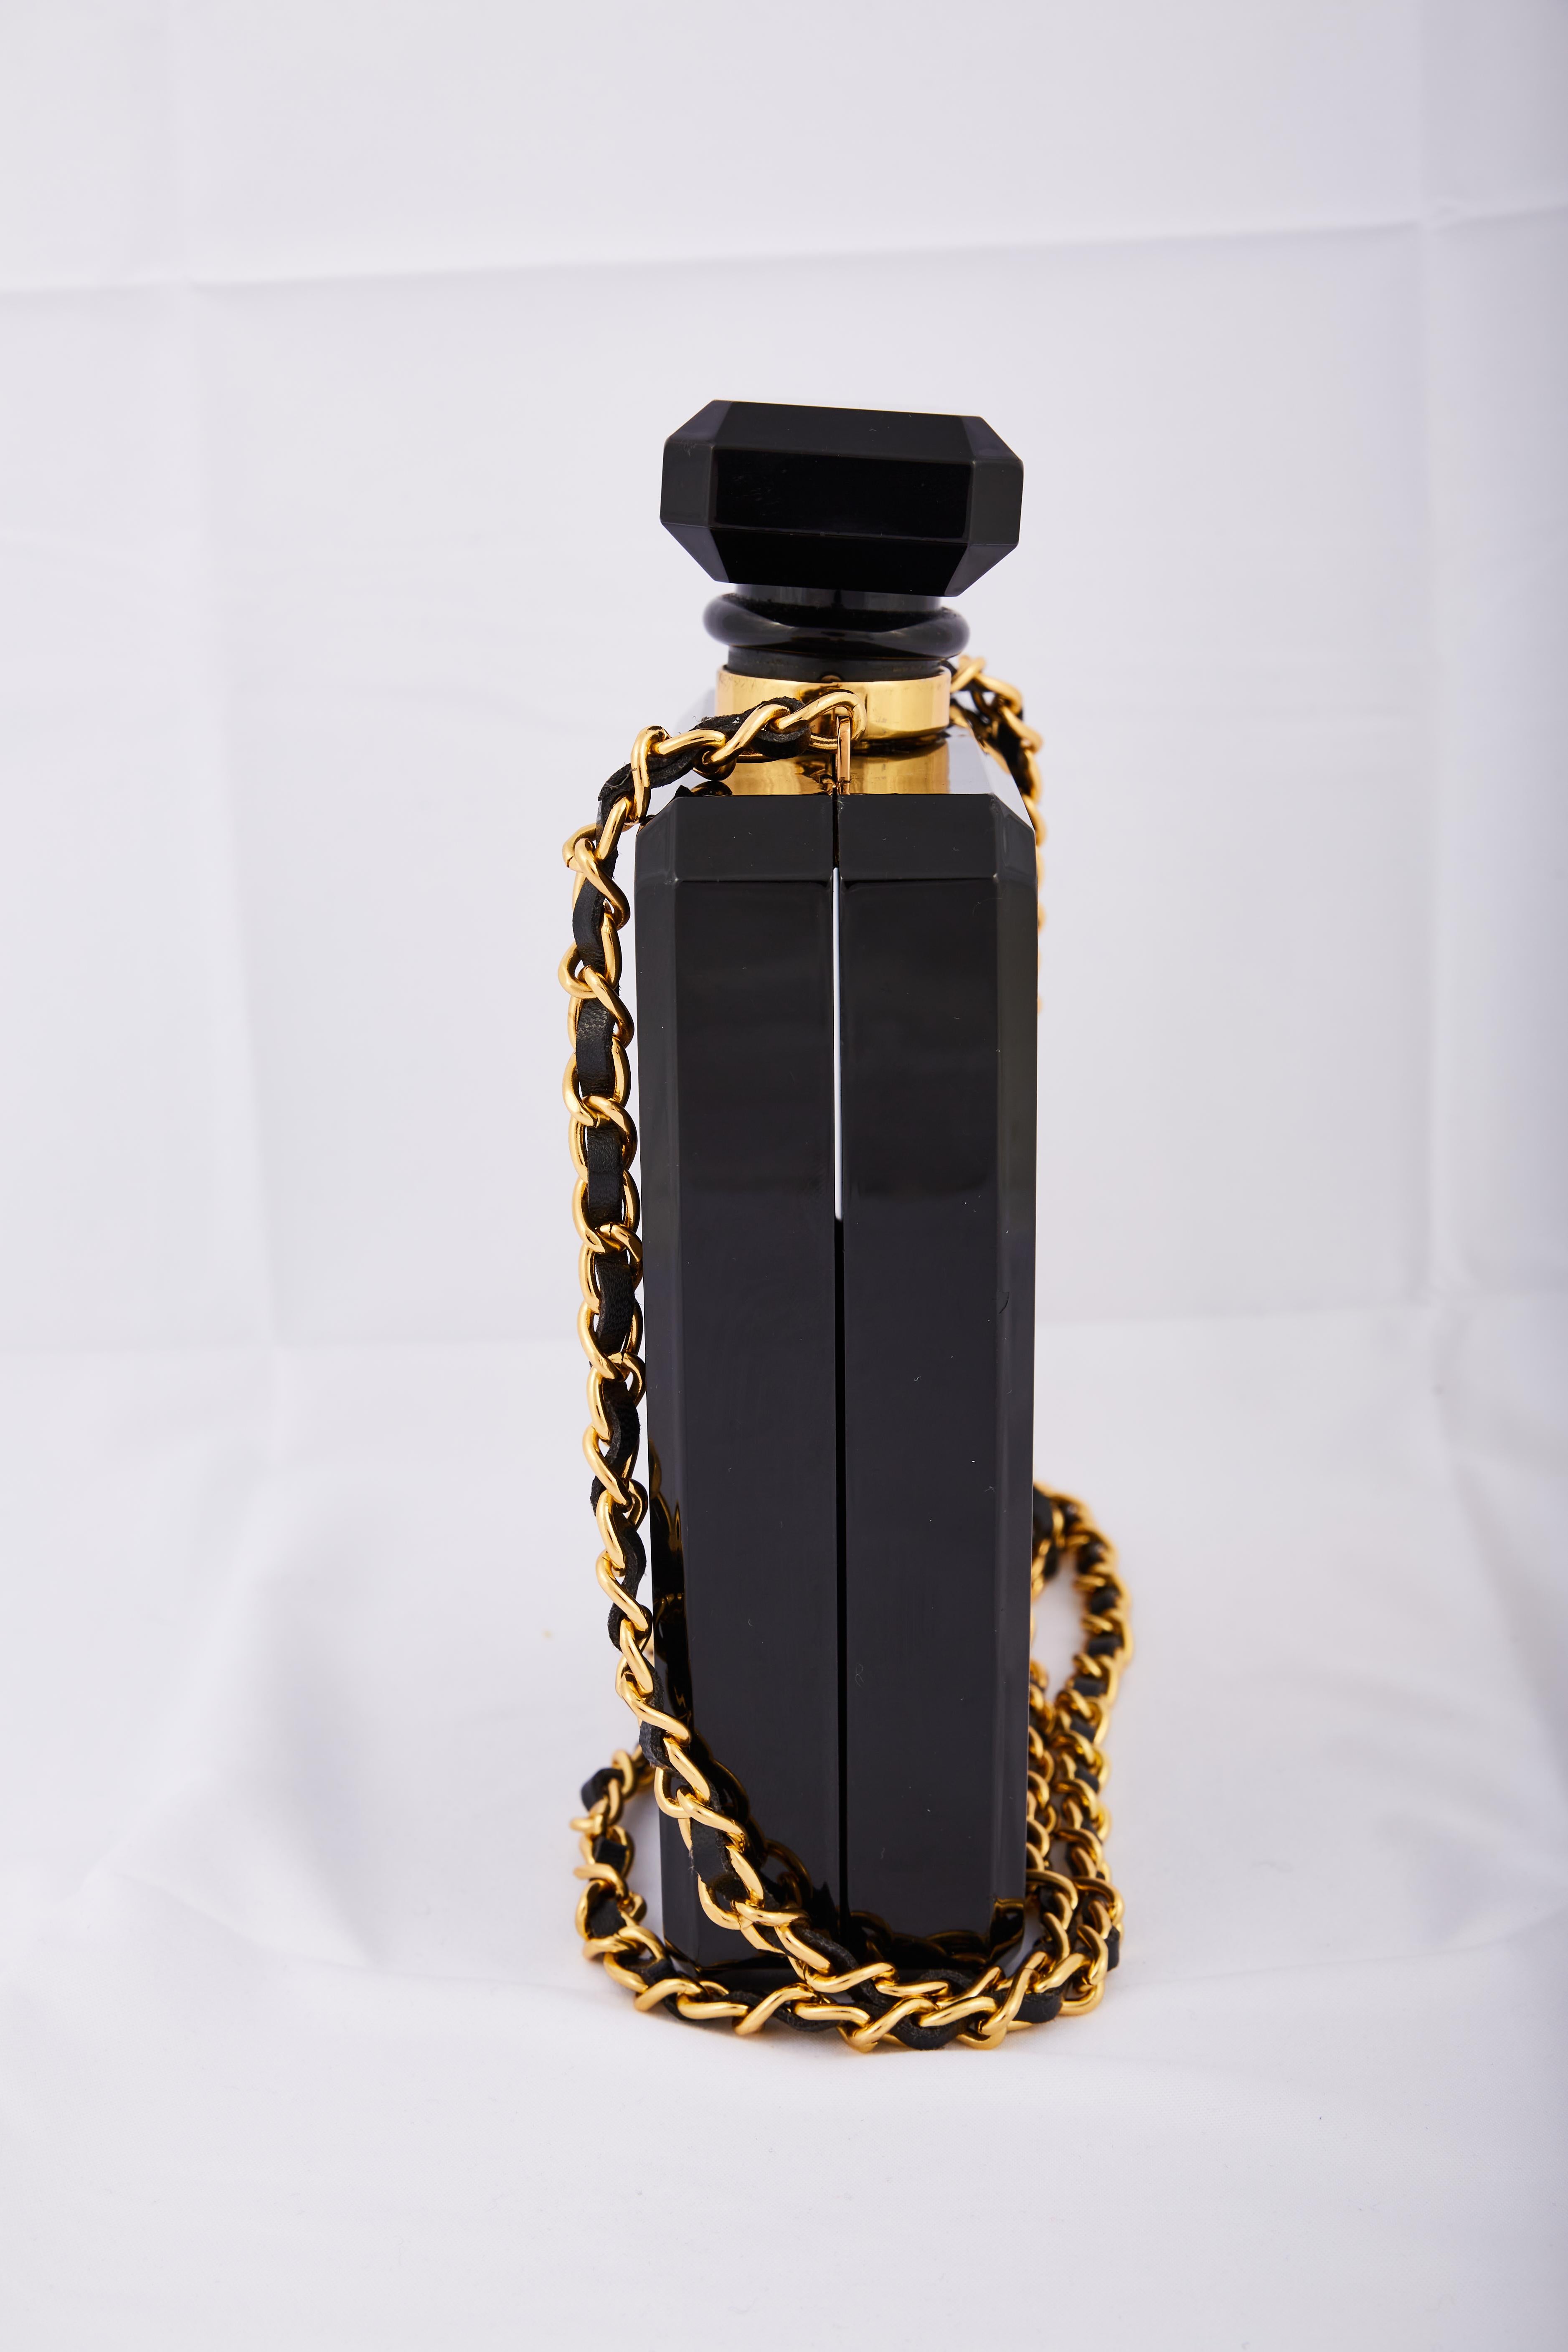 Chanel No5 Perfume Black Limited Edition Evening Shoulder Bag For Sale 4